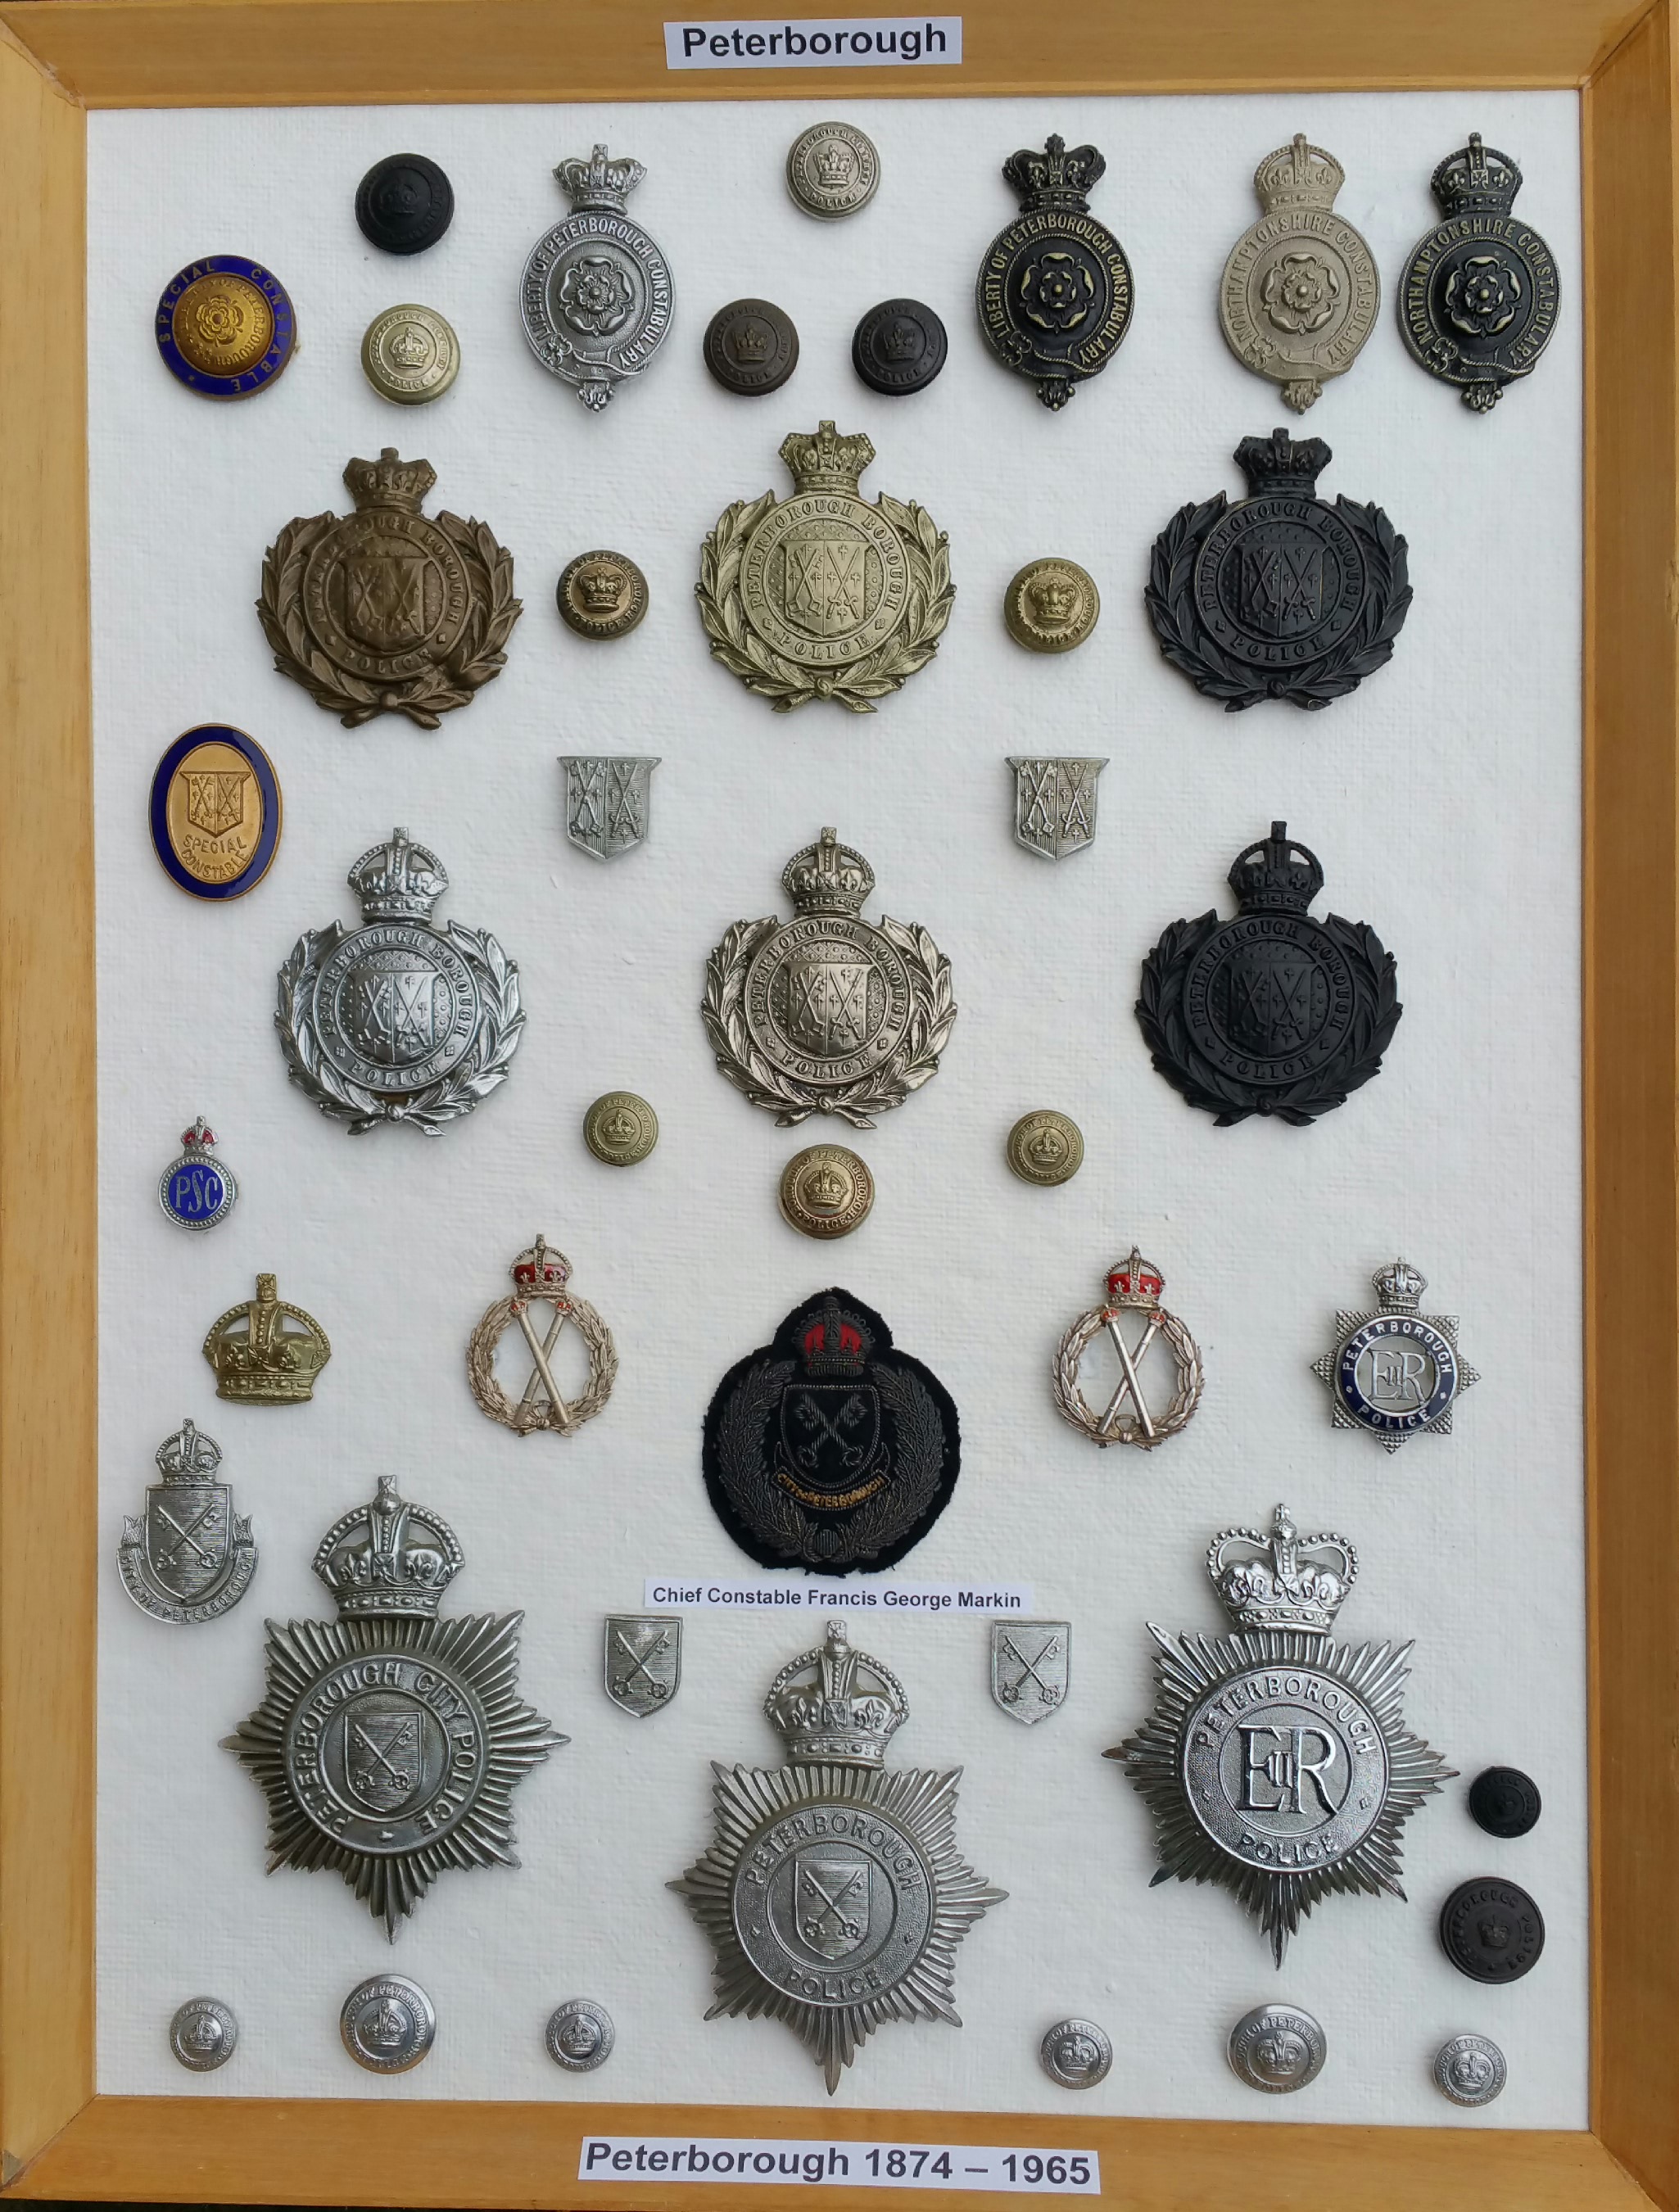 http://alan.swain.me.uk/badges/peterborough-police-badges.jpg